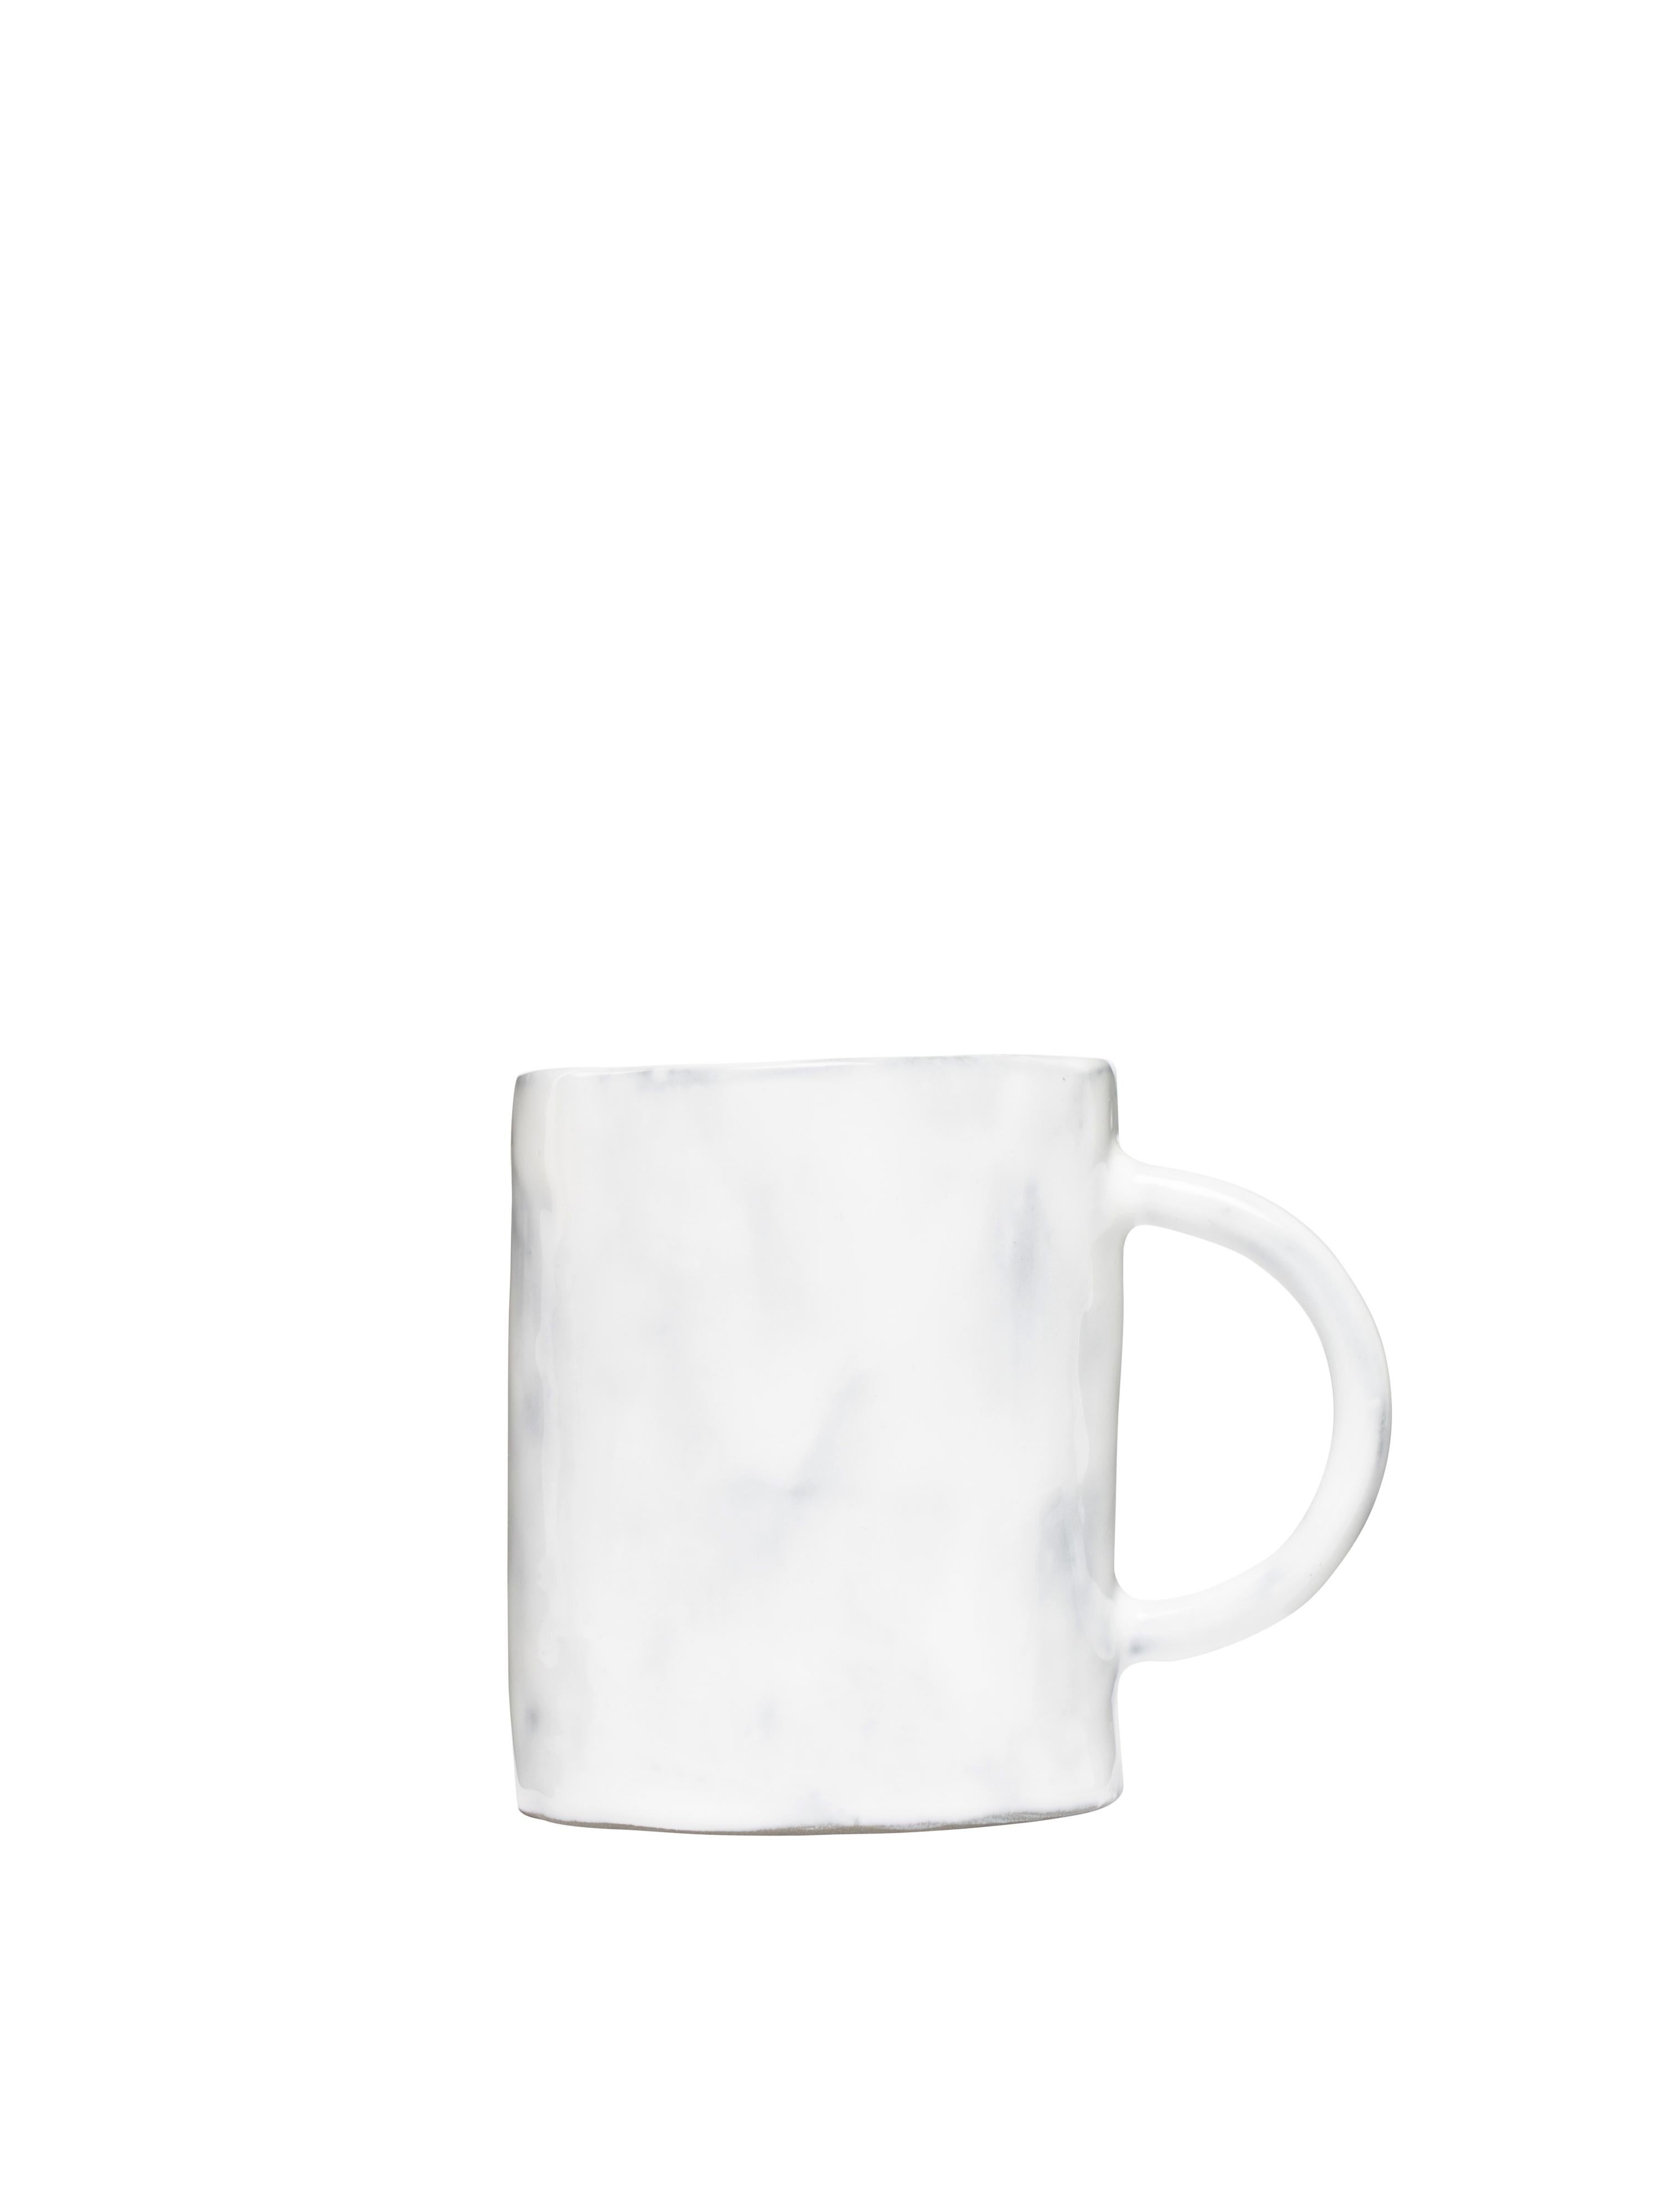 Off-White Glossy Ceramics Coffee Mug Taupe No Color For Sale